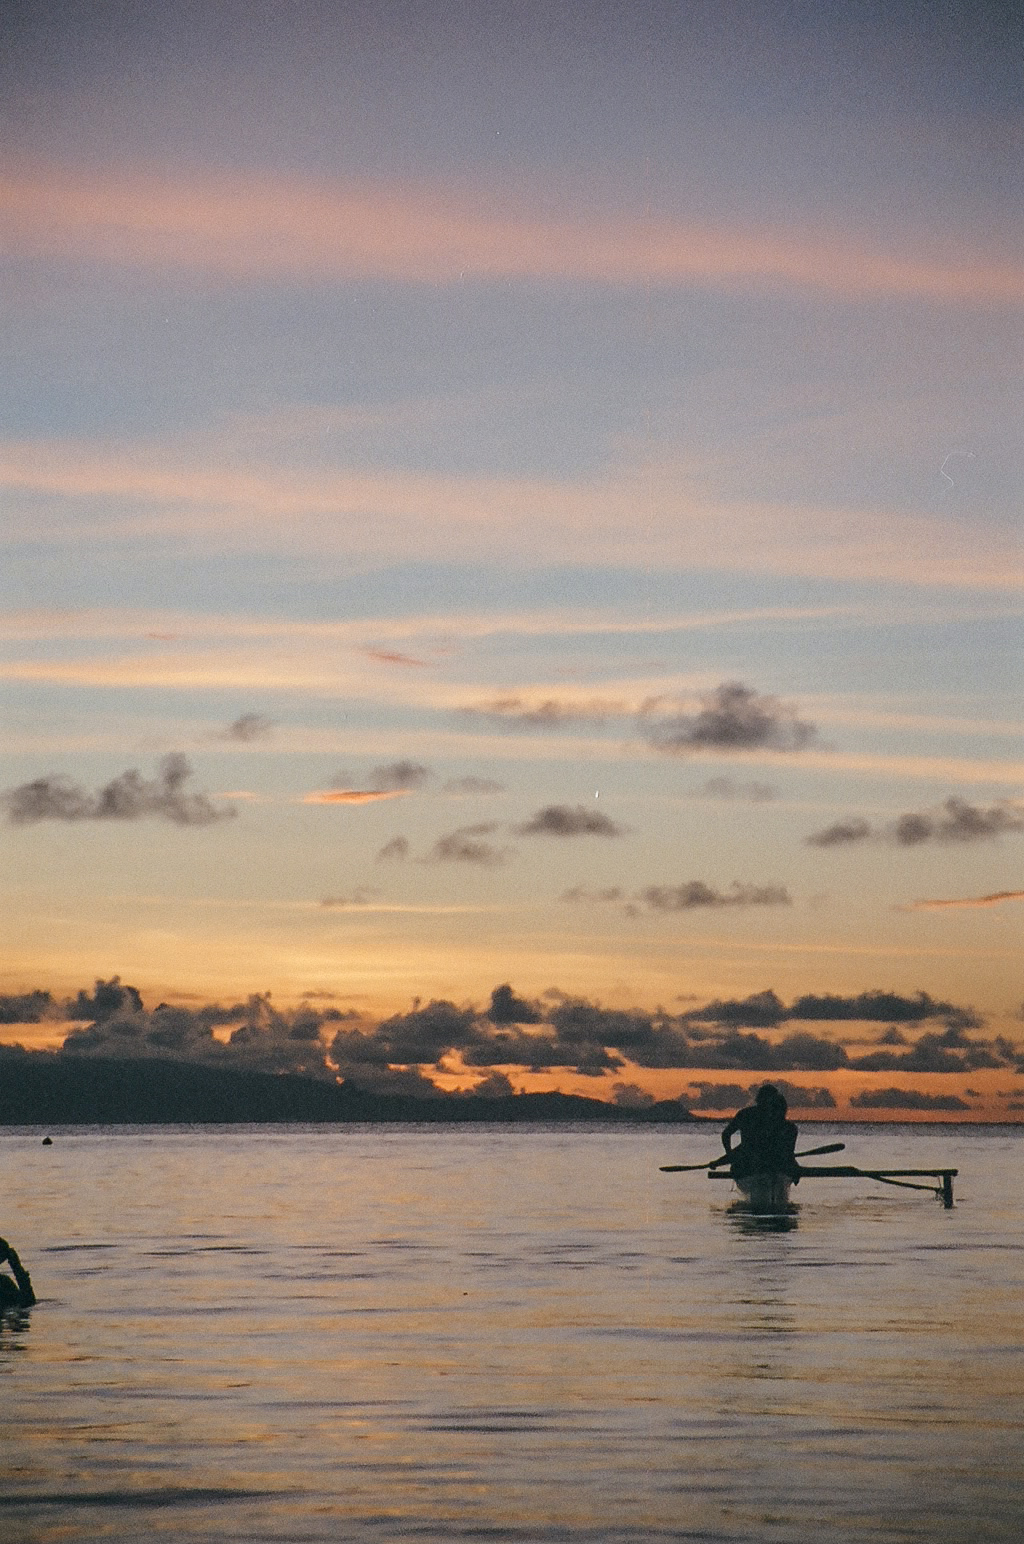 ocean sunset / tahiti travel photography / film photos / kelly fiance creative